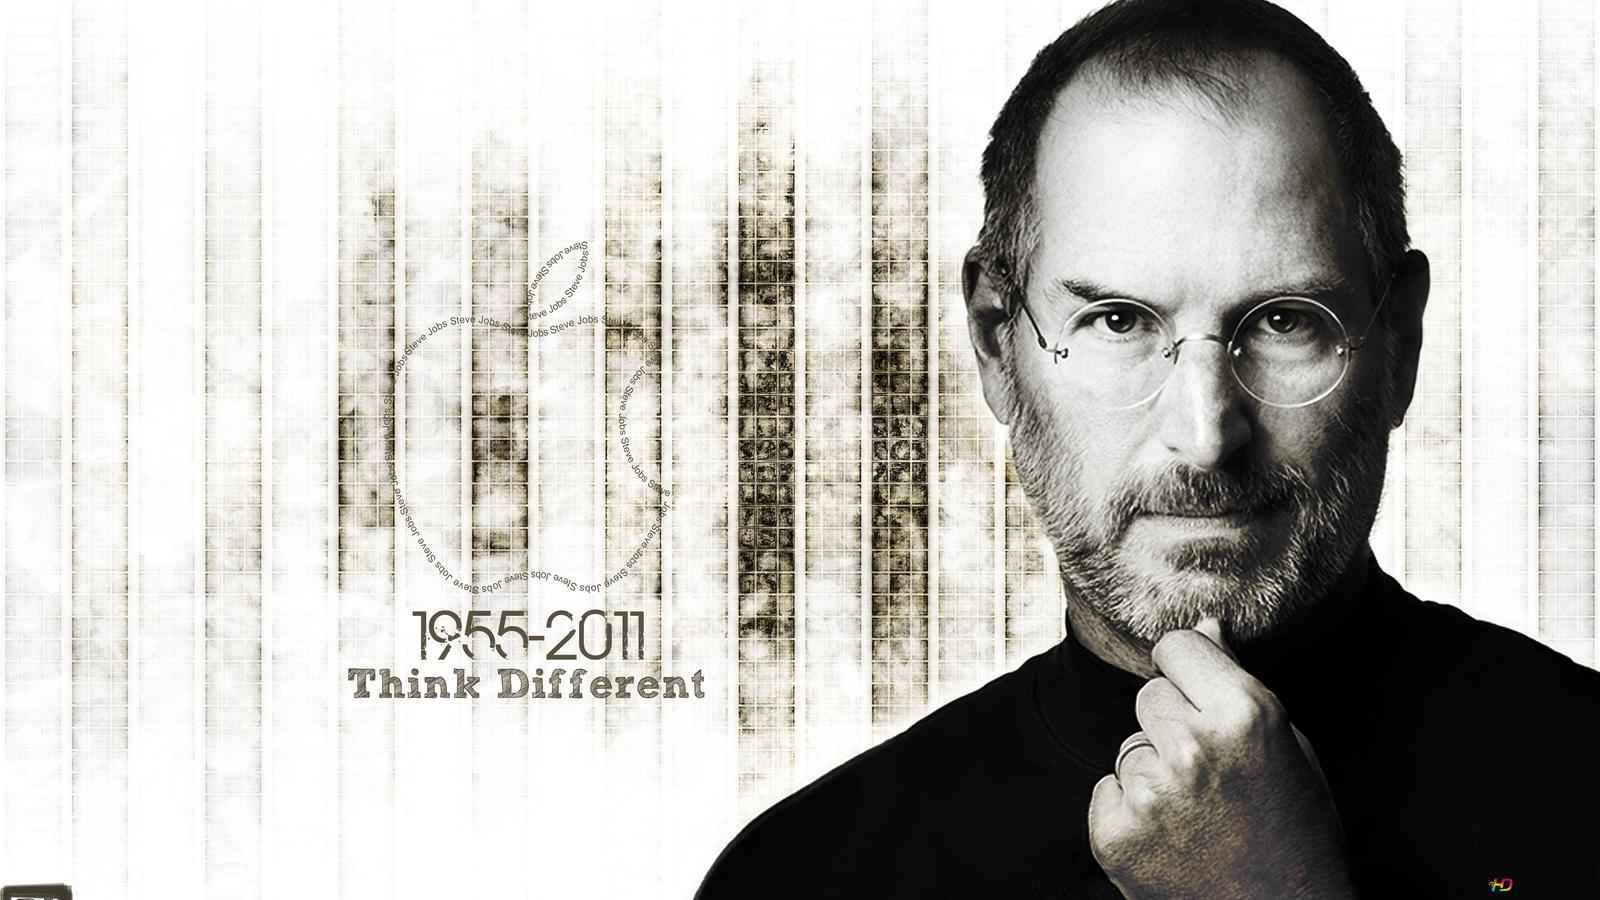 Steve Jobs Biography: Age, Height, Birthday, Family, Net Worth